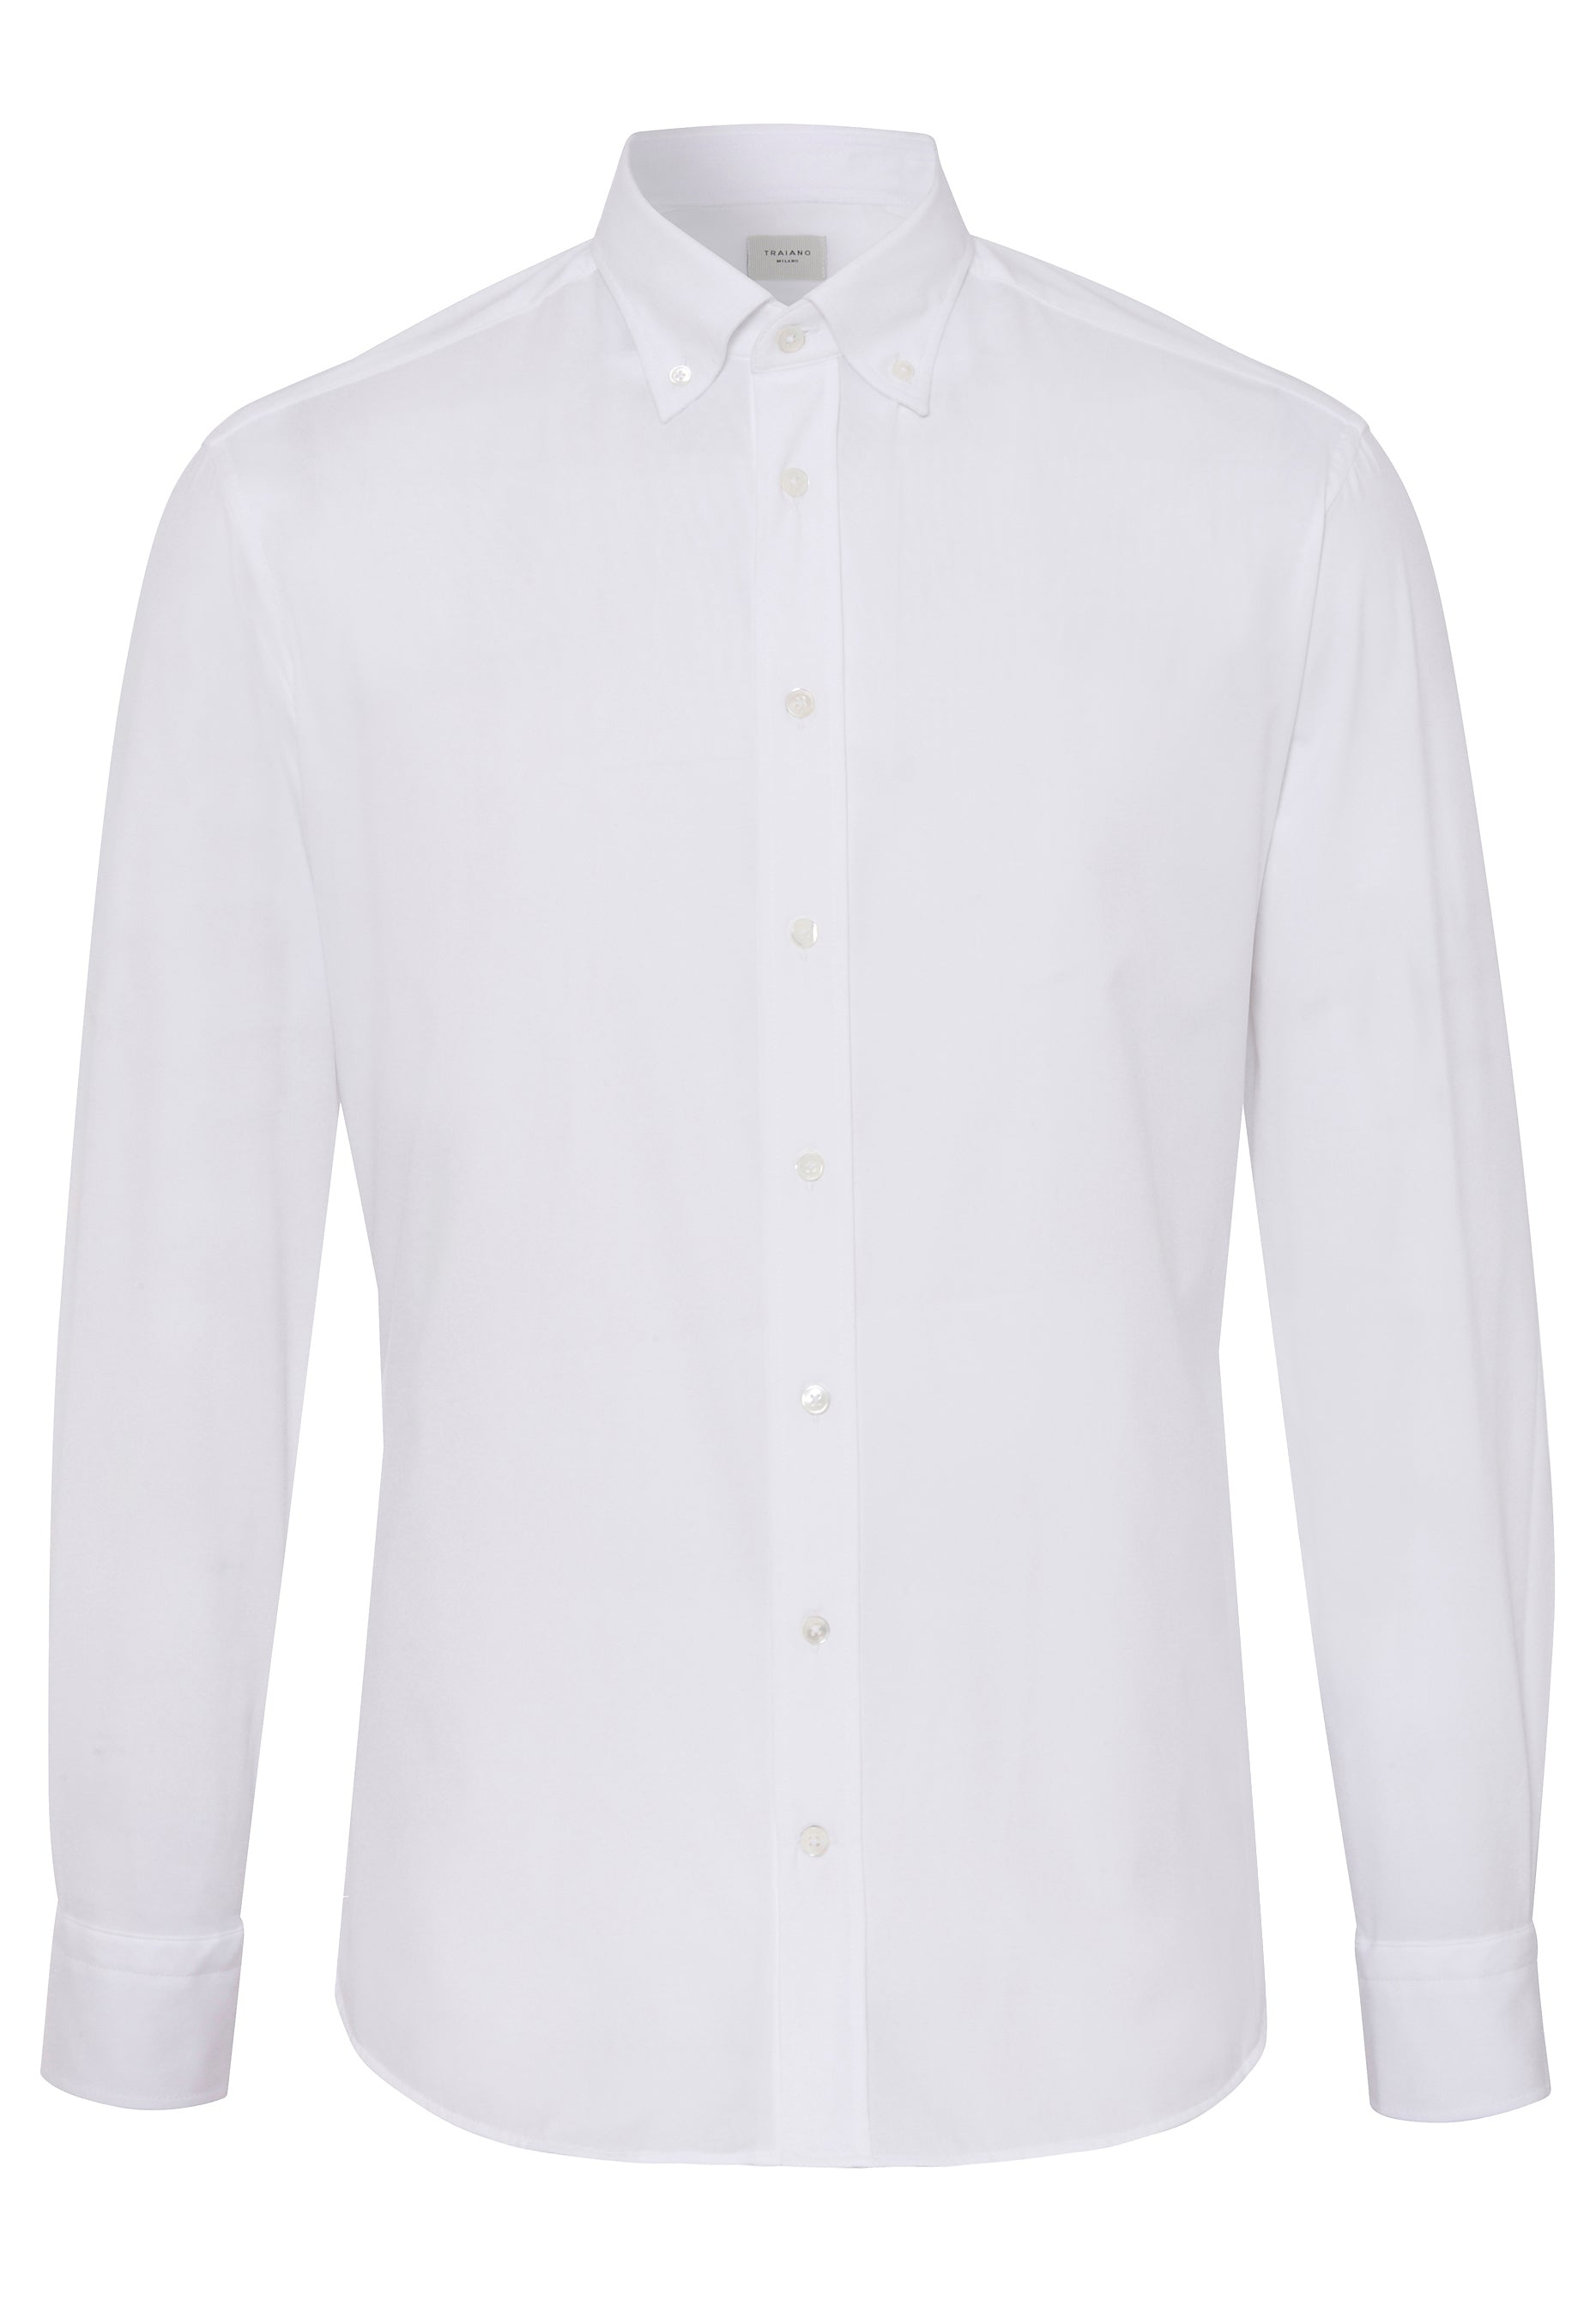 T1000-312 Traiano Button Down Radical Fit Shirt 900 white uni